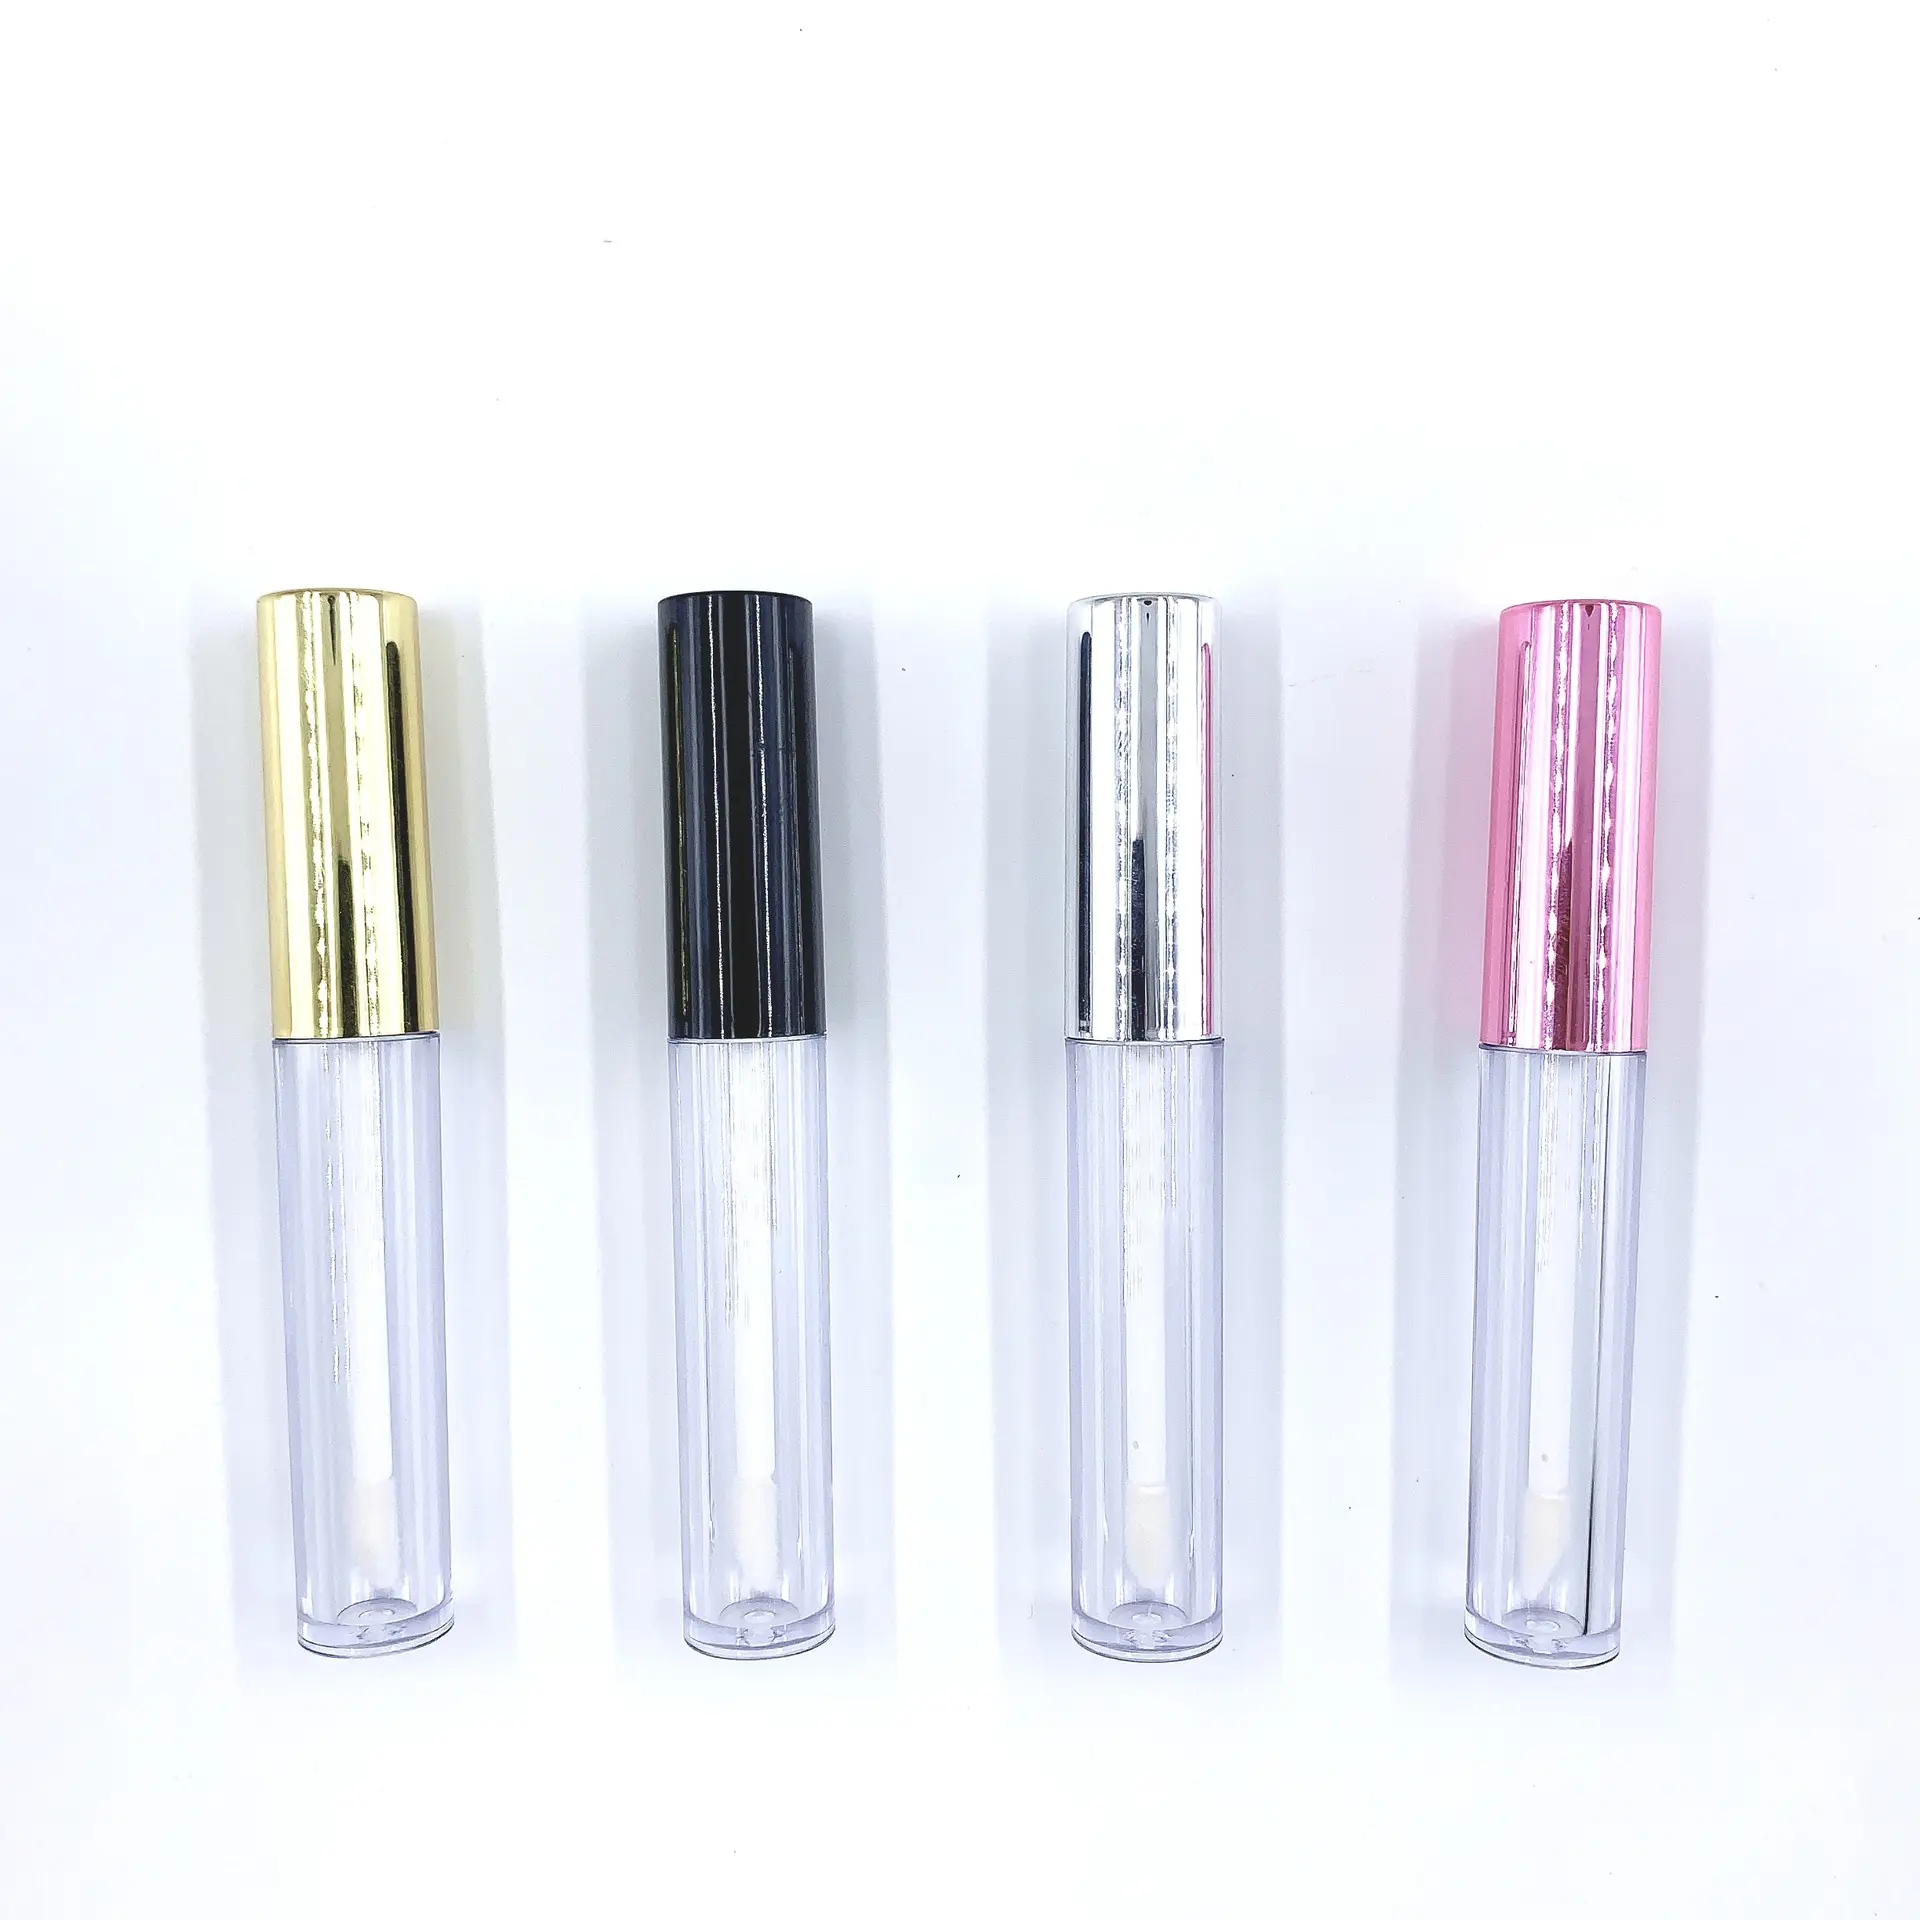 OEM ODM LOGO Empty Squeeze Lip Gloss Tubes 5ml 10ml Lip Gloss Squeeze Tube for Balm Lipgloss Containers Mini Soft Tube